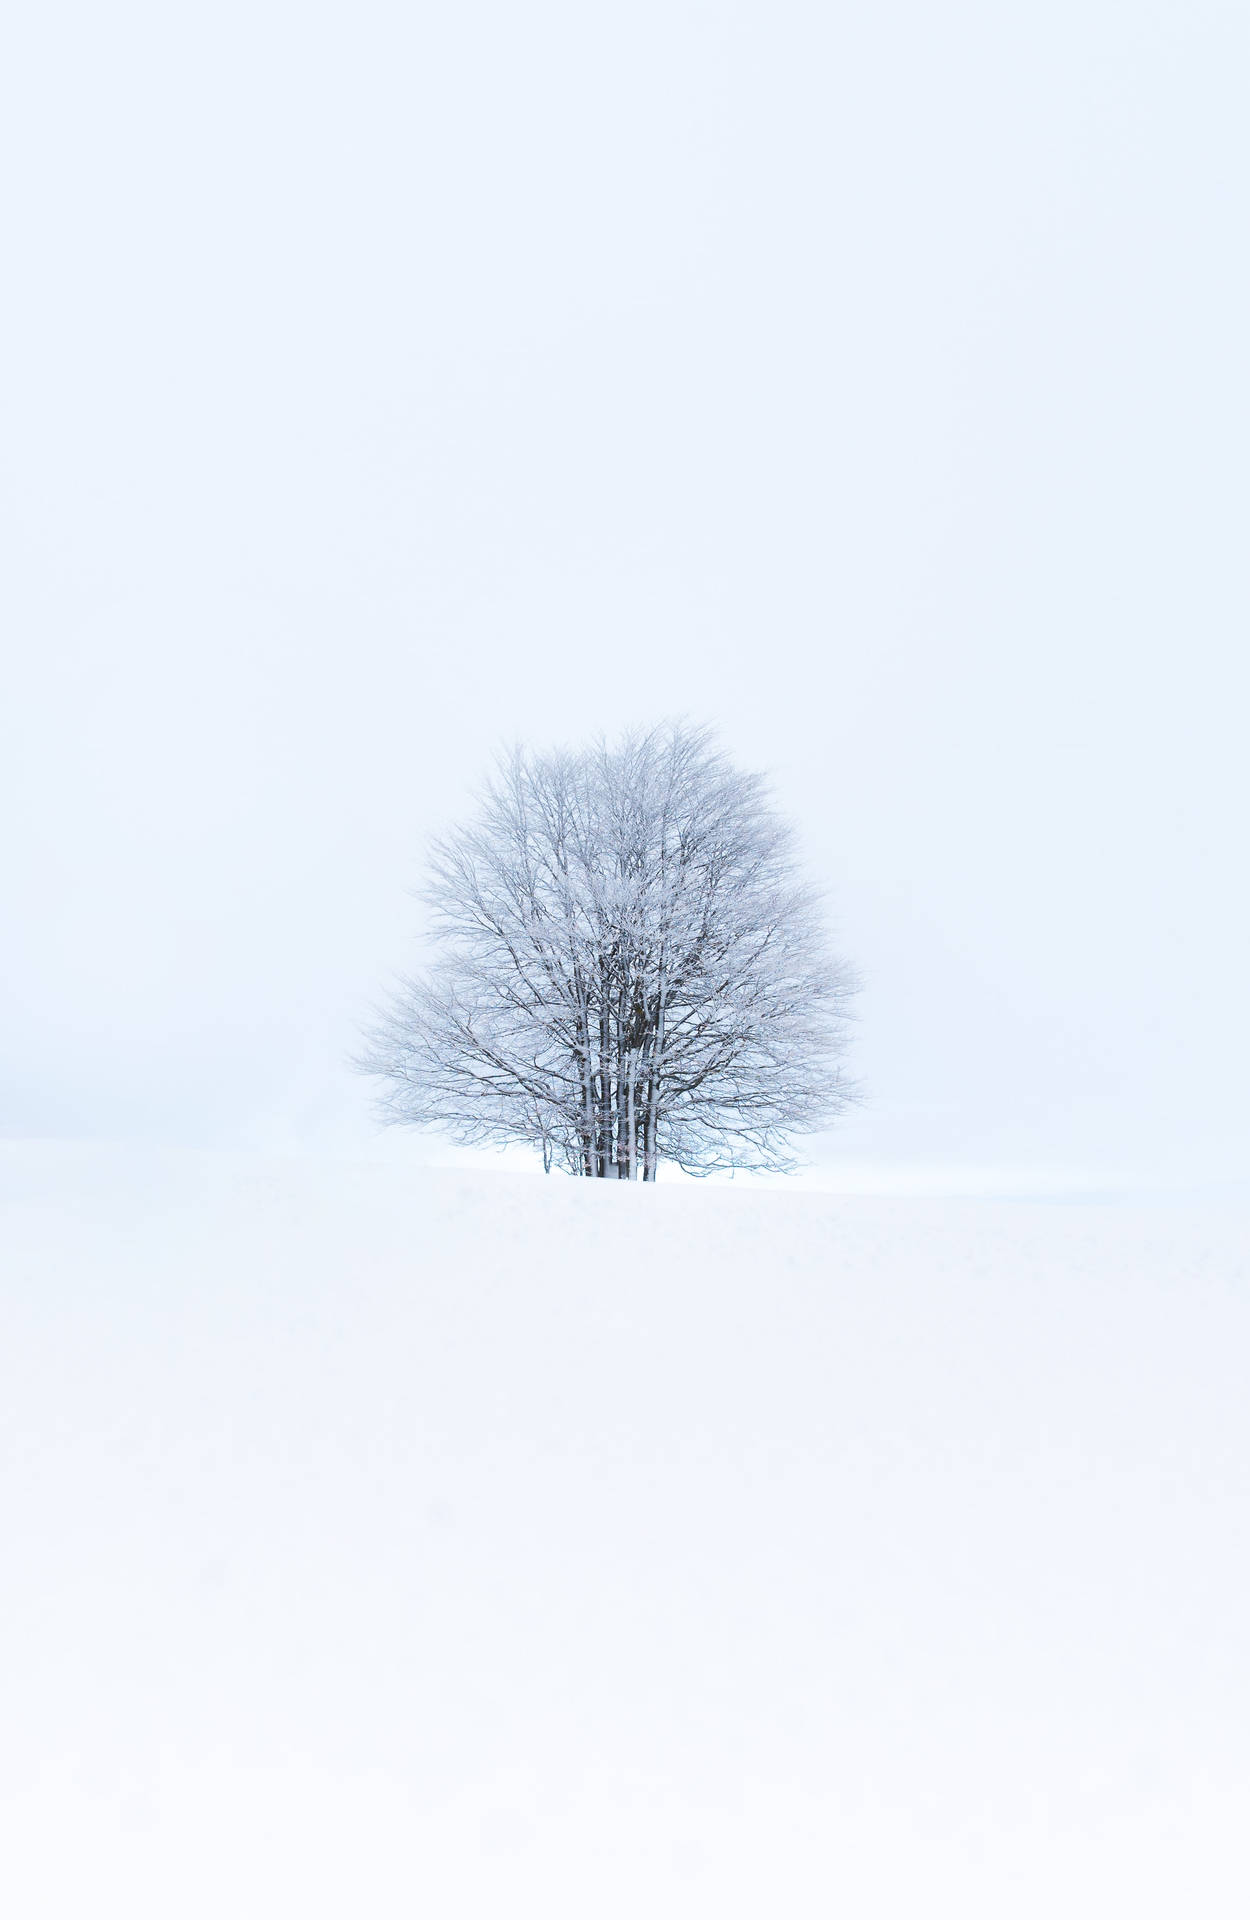 Tree, snow, winter, minimalism, white